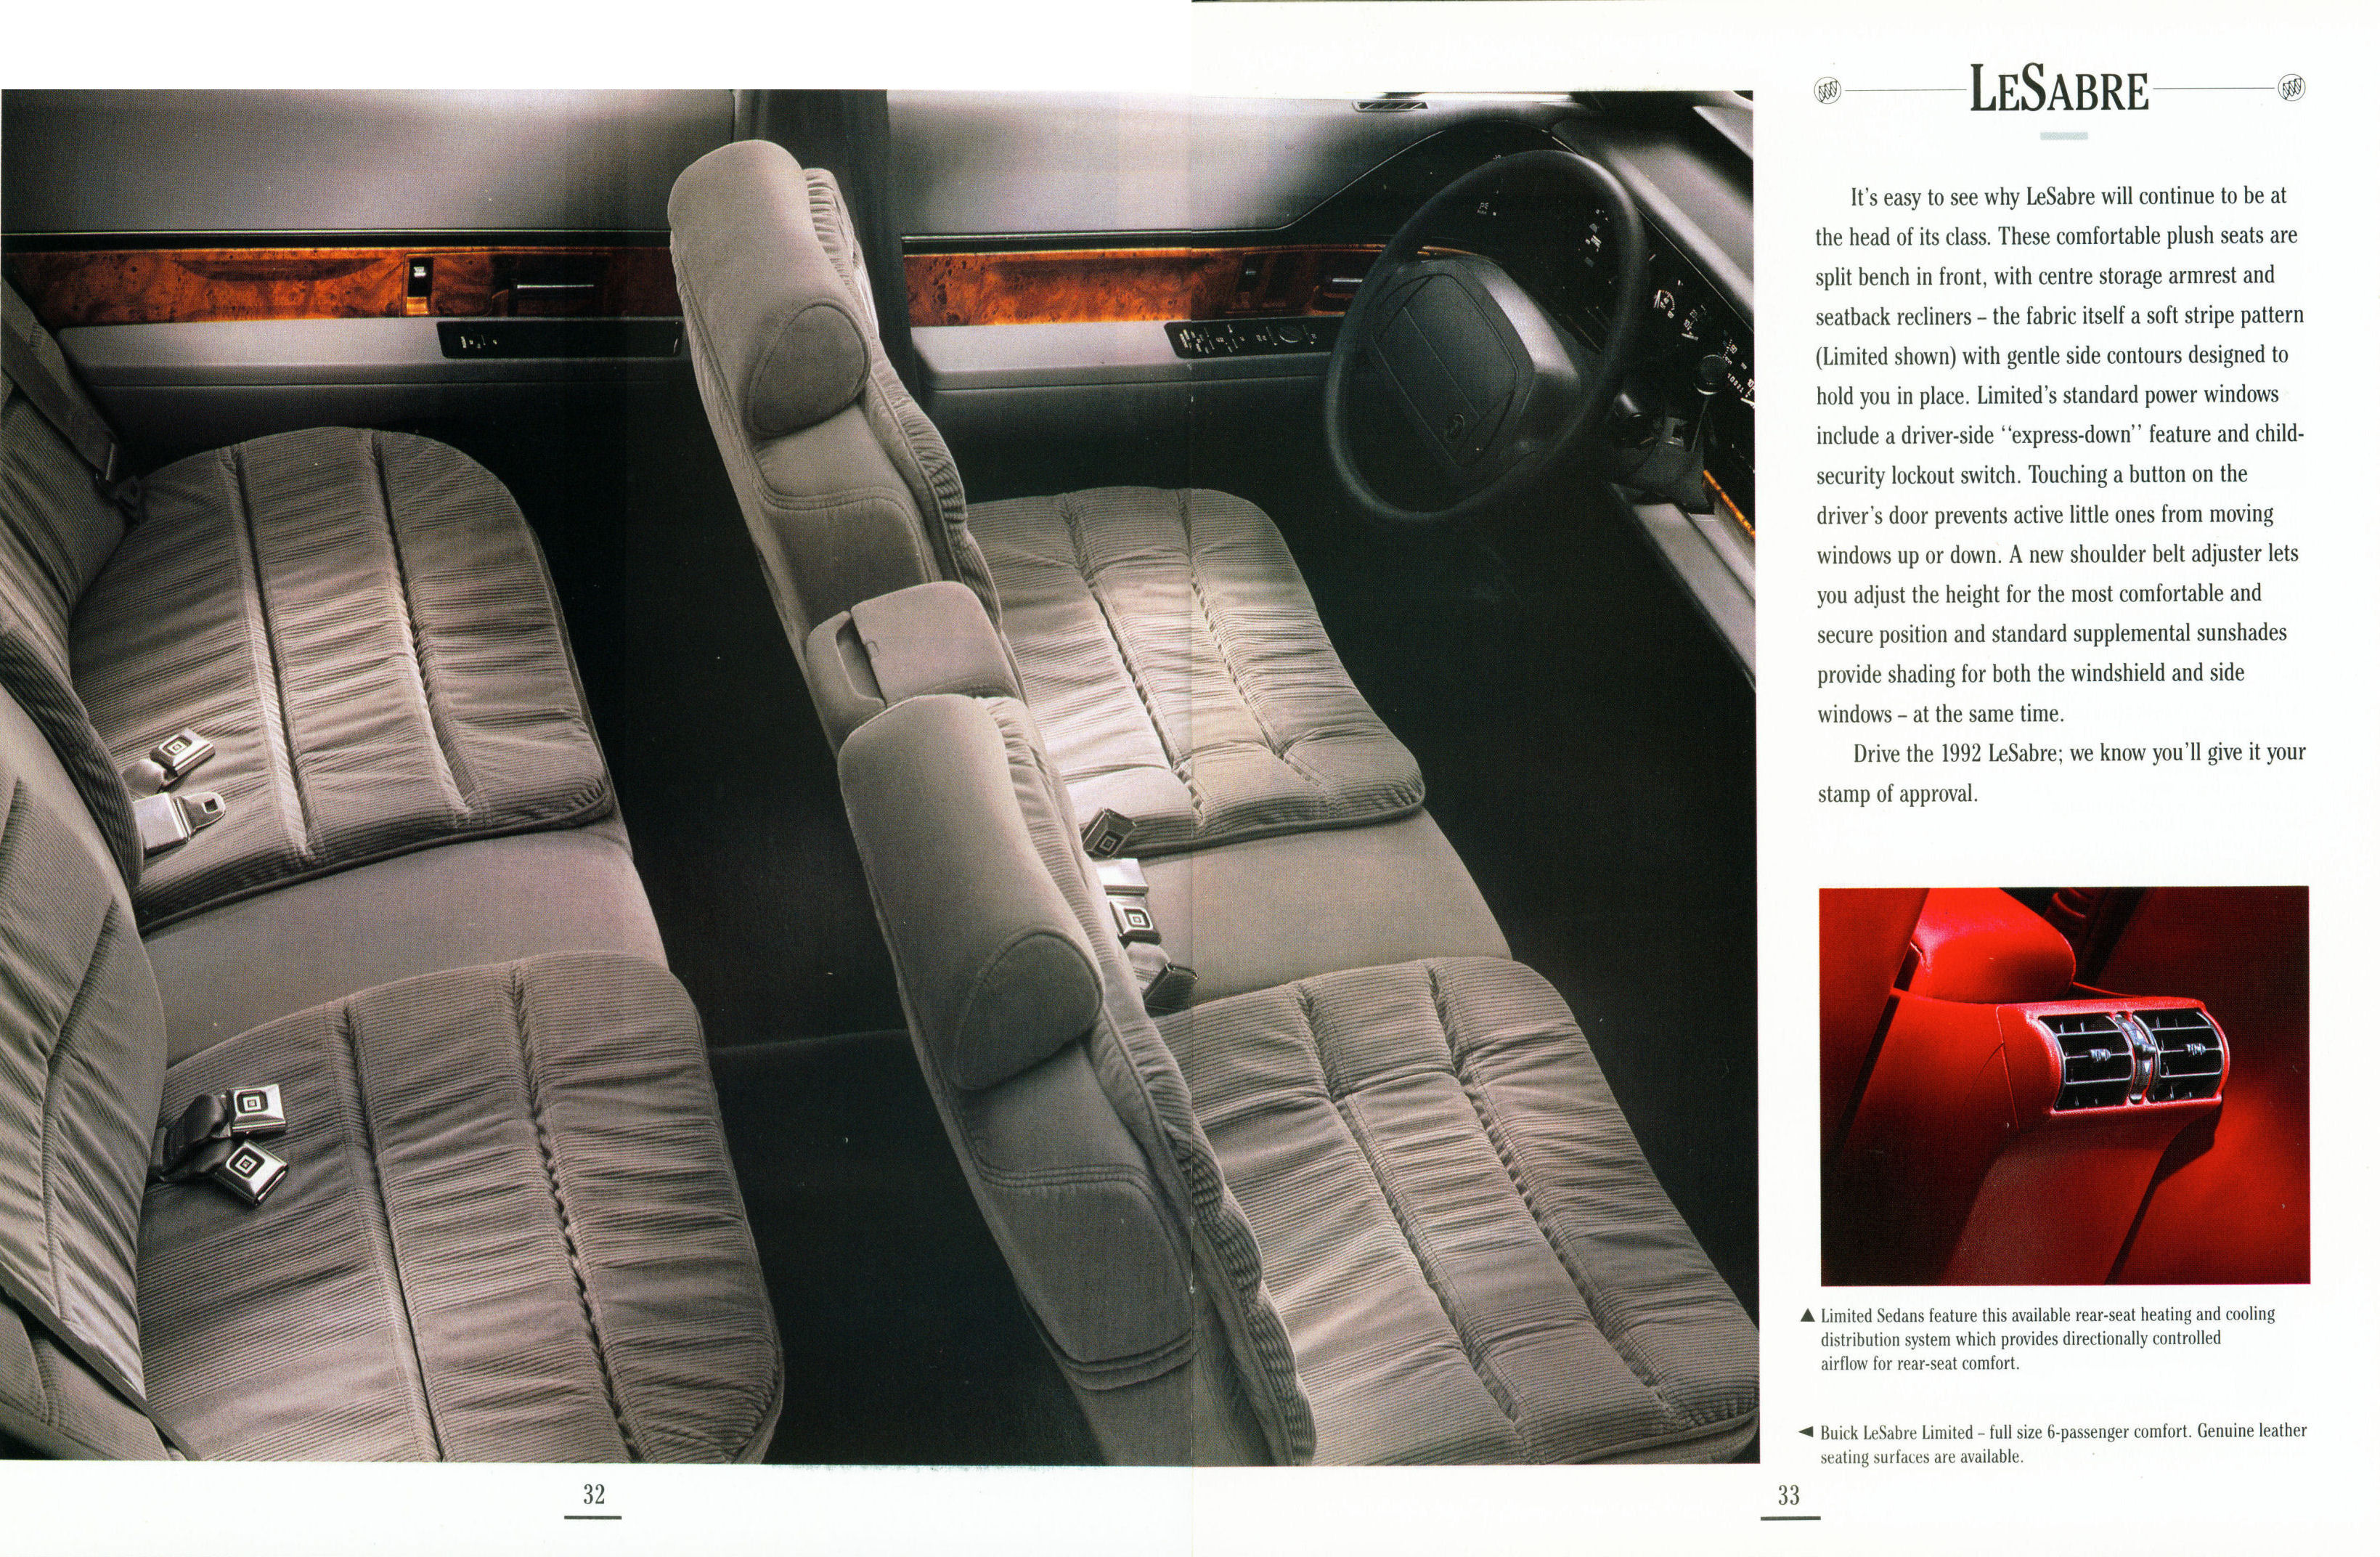 1992_Buick_Full_Line_Prestige_Cdn-32-33